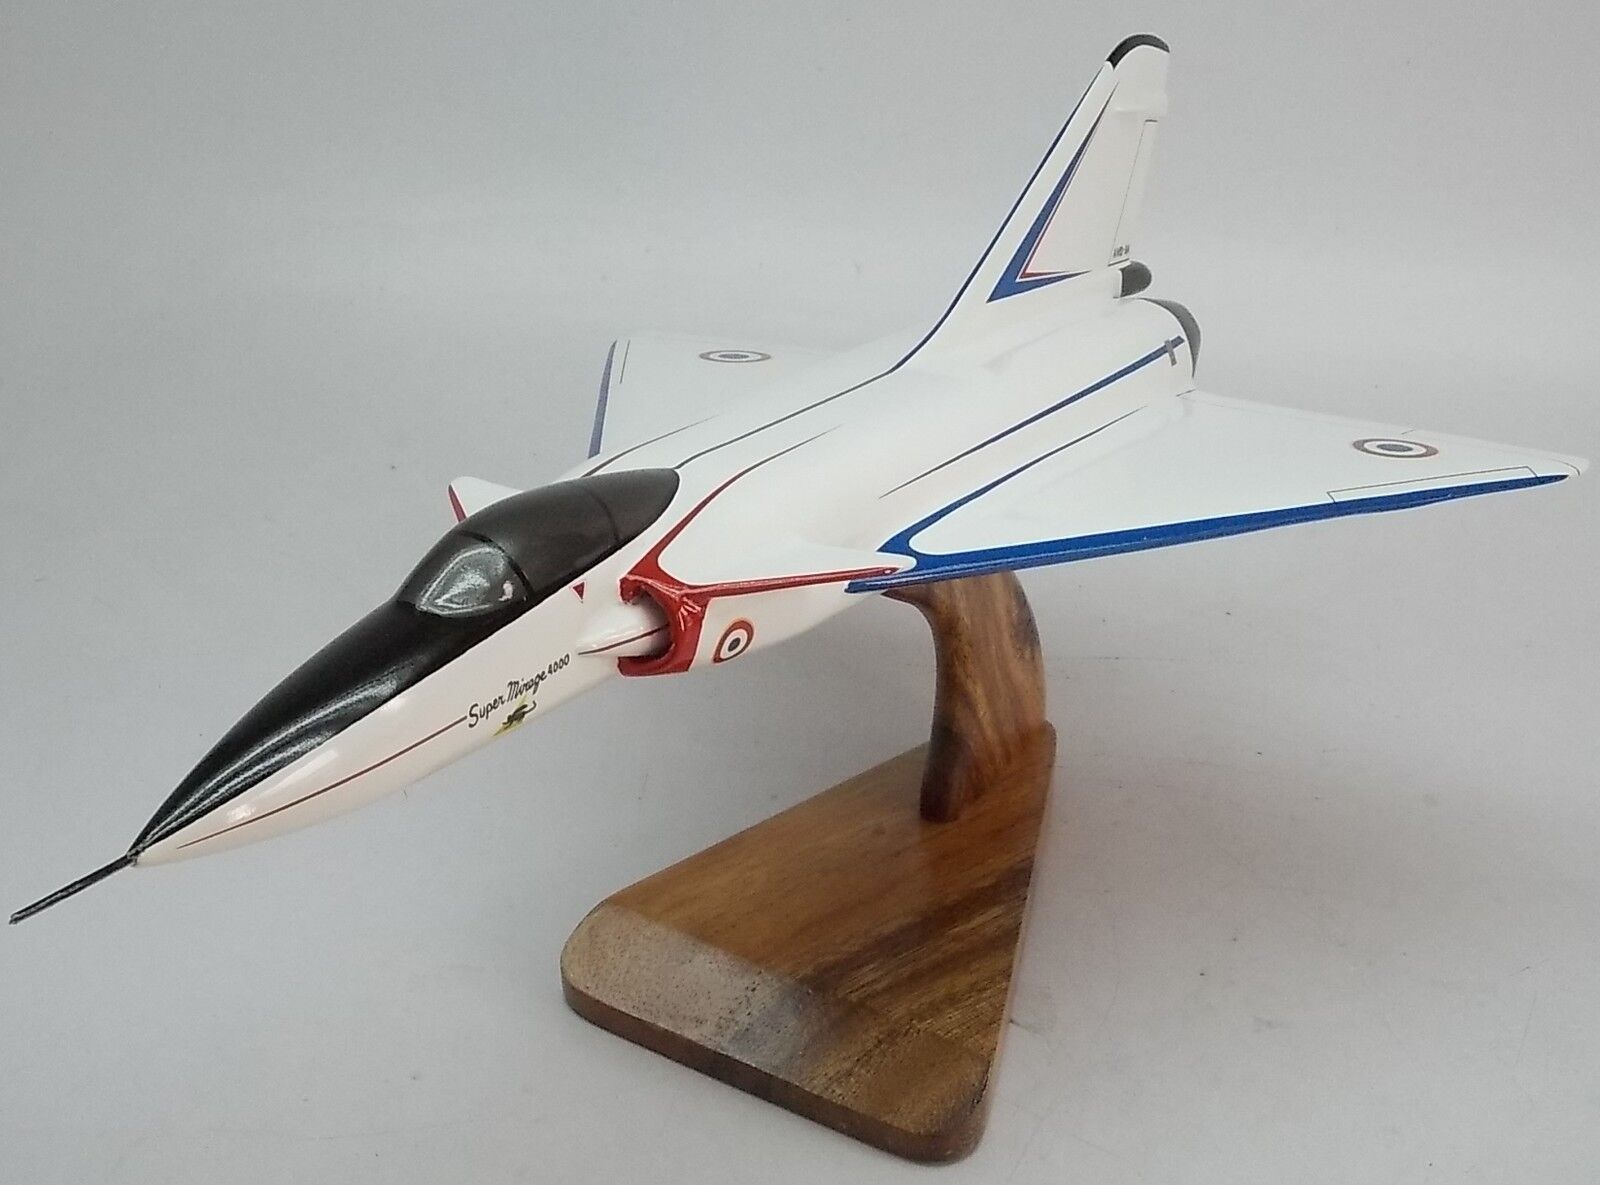 Dassault Mirage 4000 Aiplane Mirage-4000 Desktop Wood Model Small New